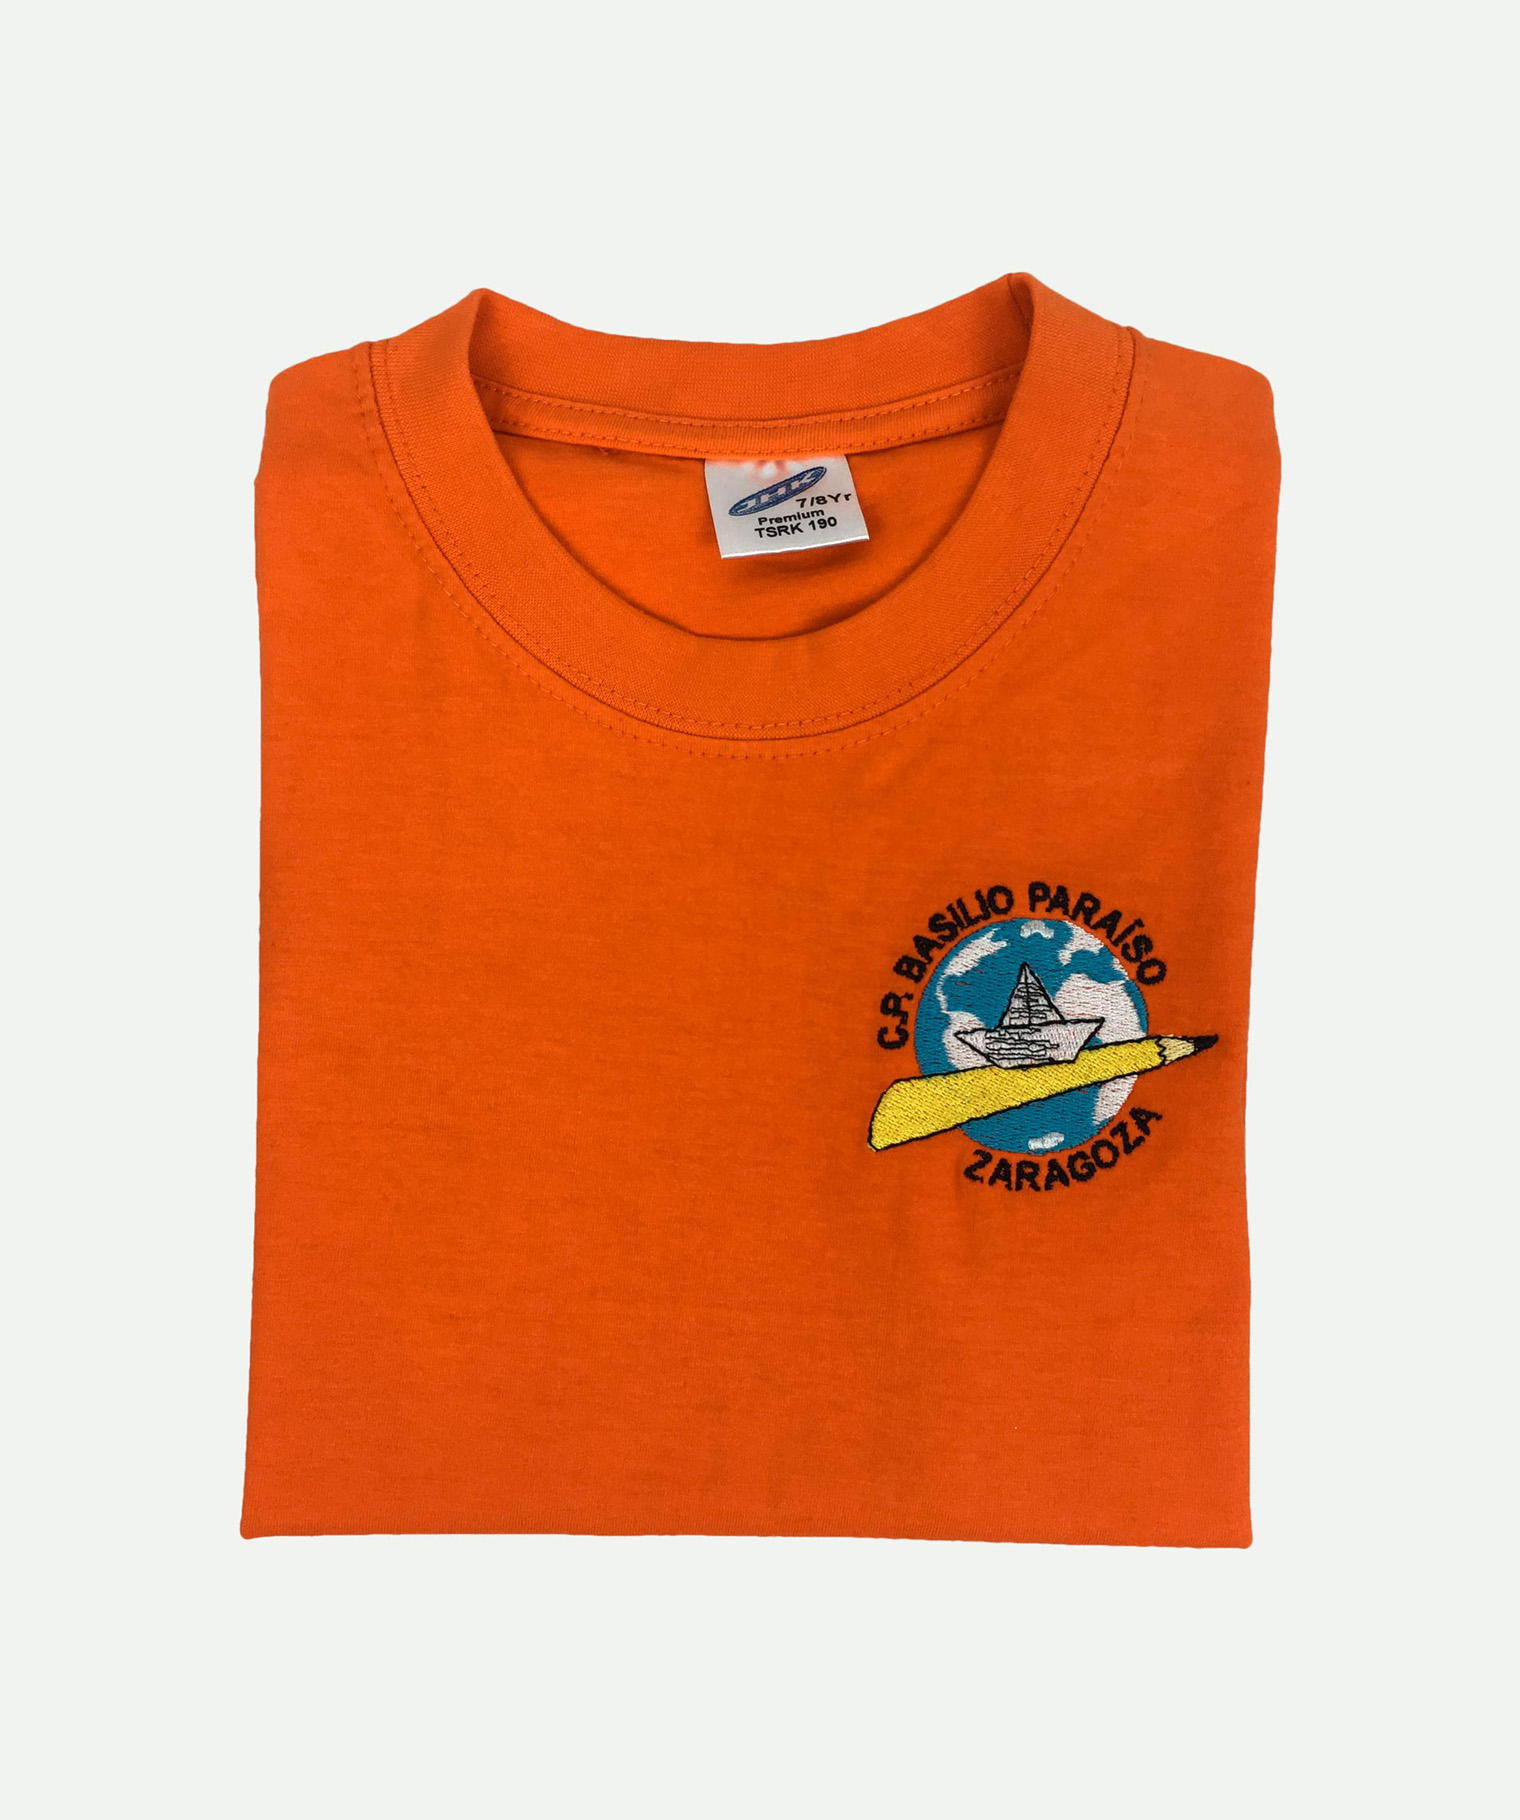 Camiseta bordada de niño naranja